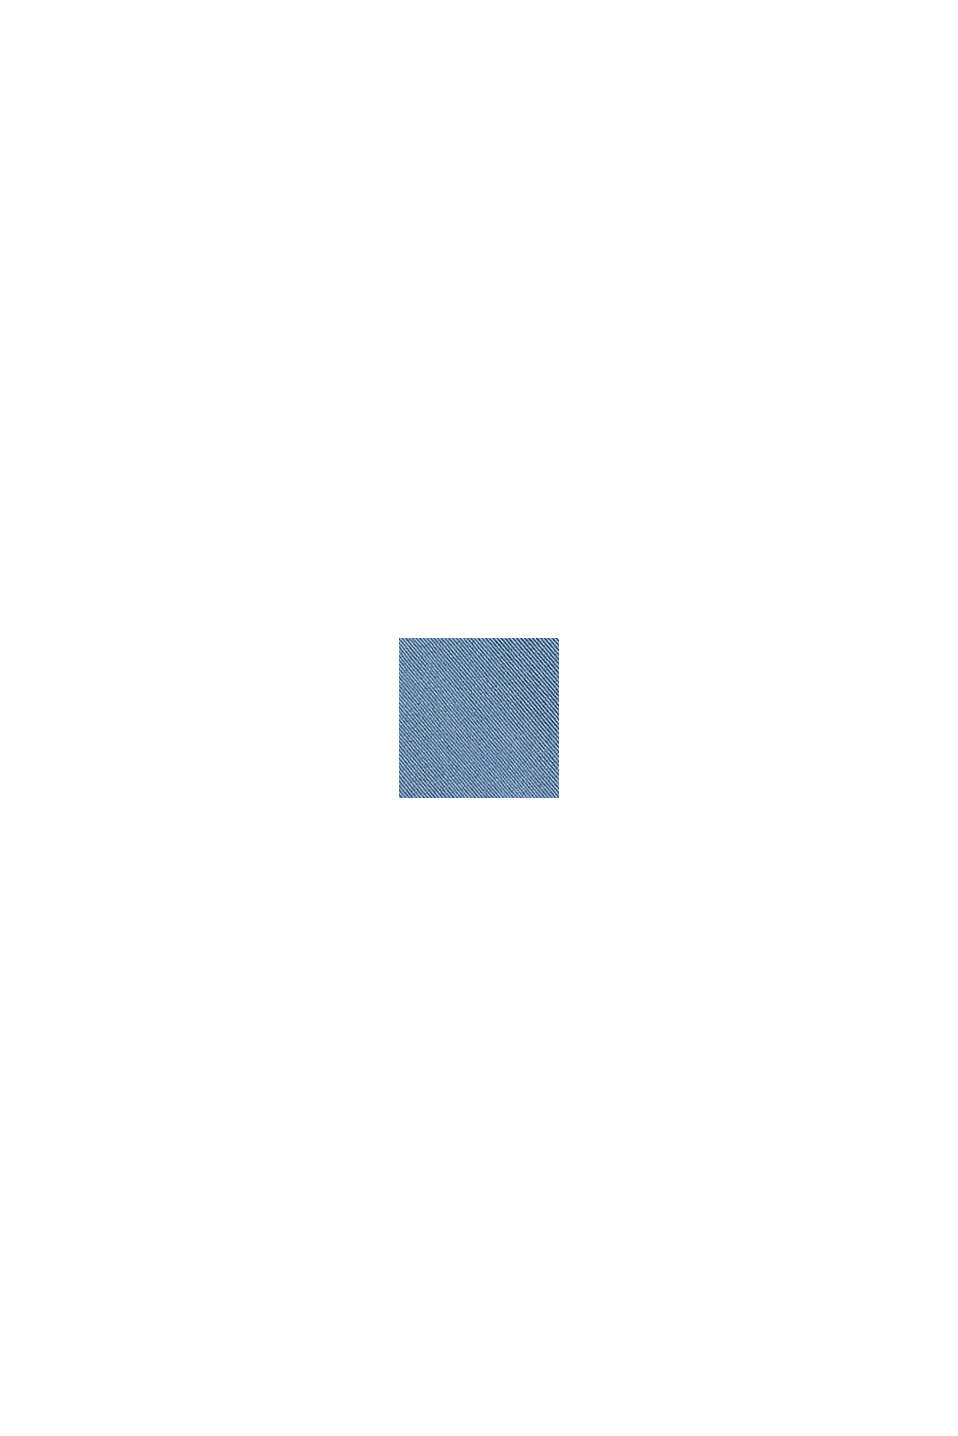 Pantalón chino de algodón ecológico con llavero, BLUE, swatch